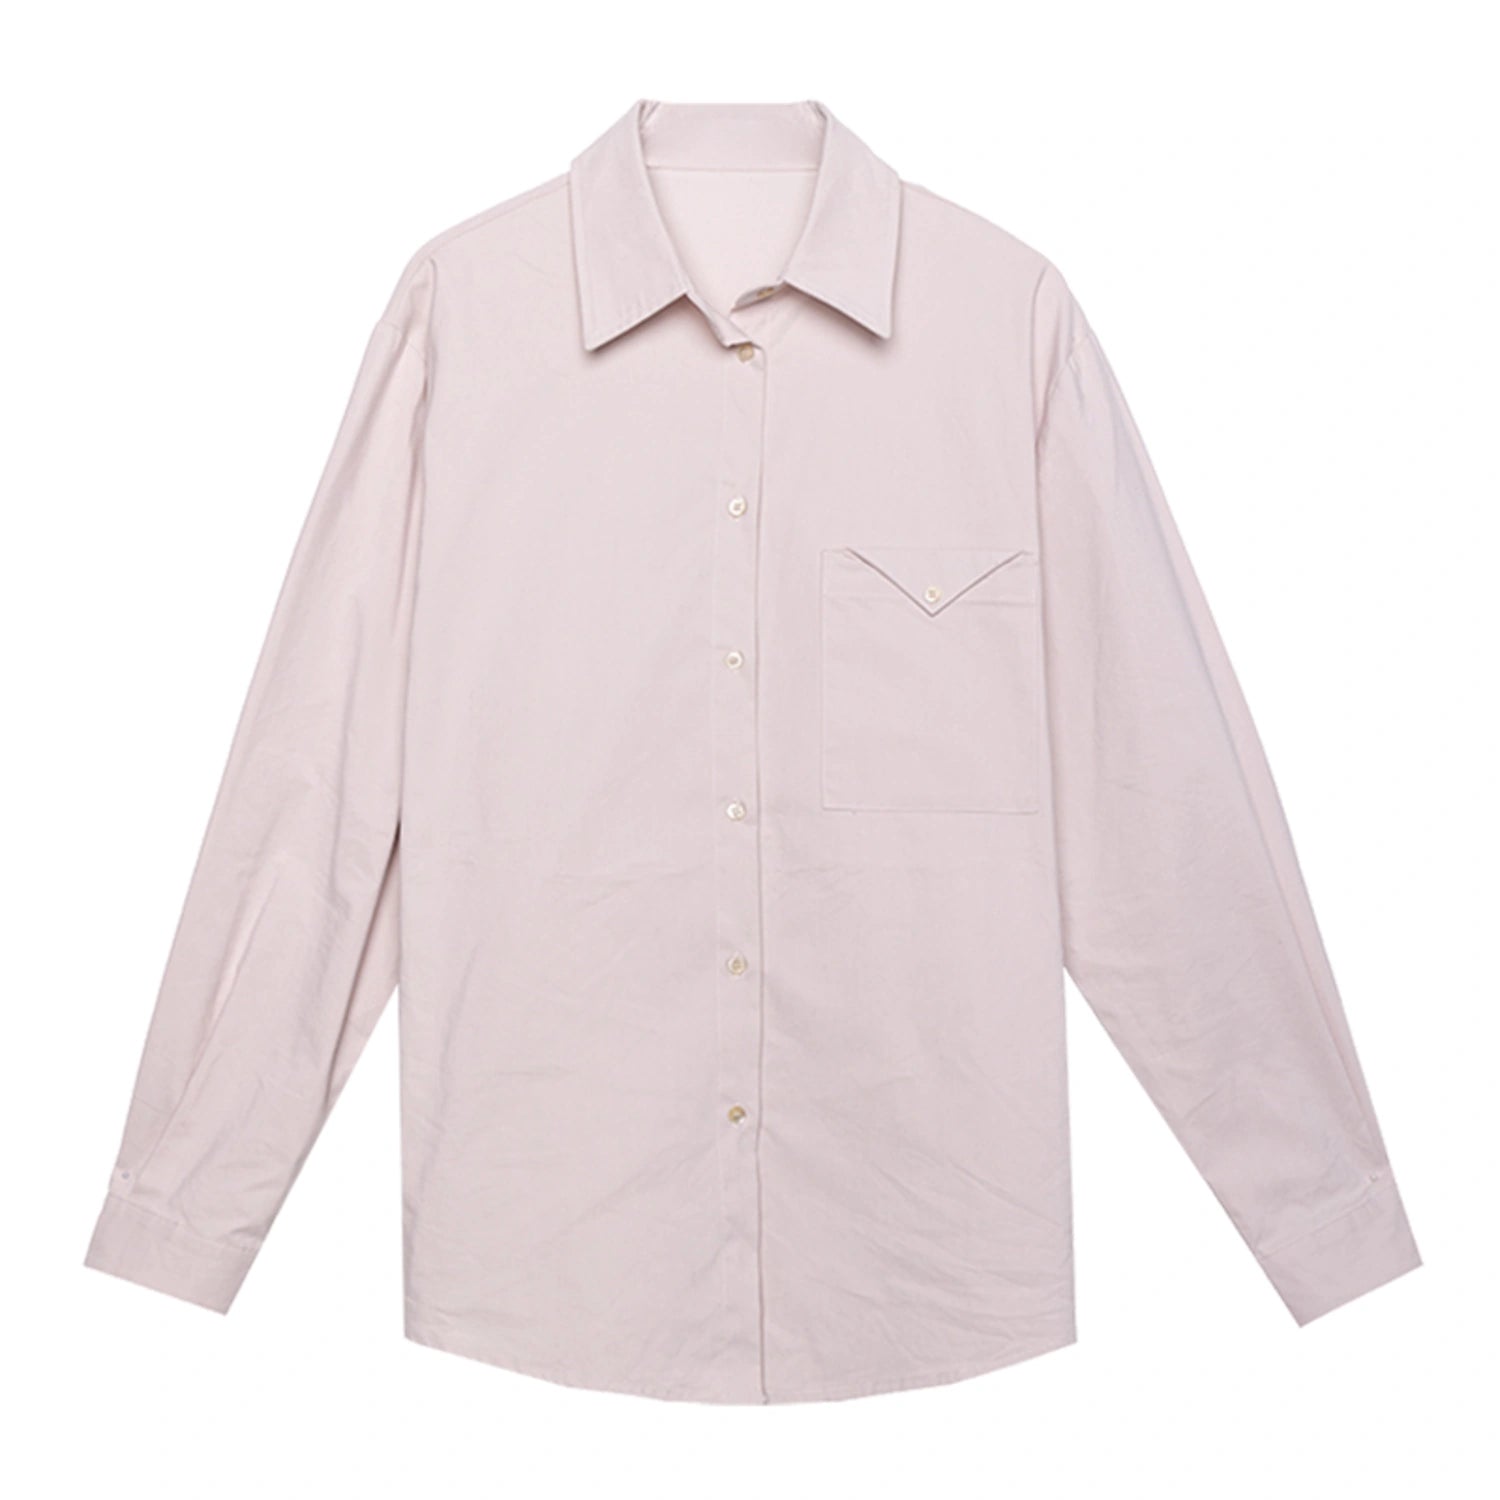 Versatile Women's Button-Down Shirt with Chic Chest Pocket